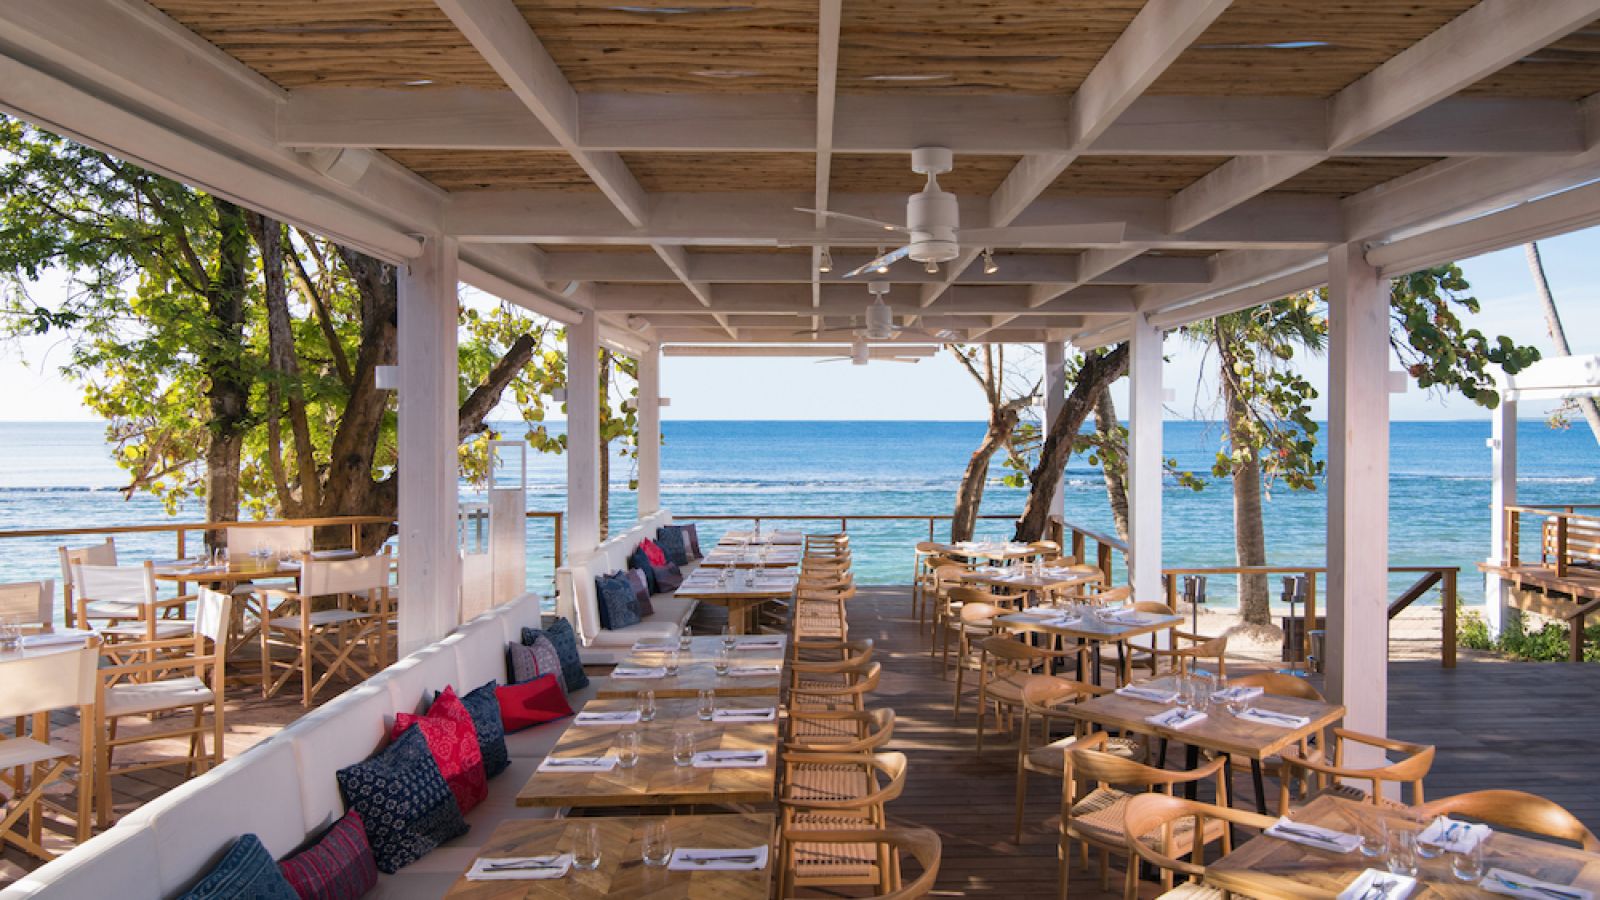 Casa de Campo - Restaurant - Beach